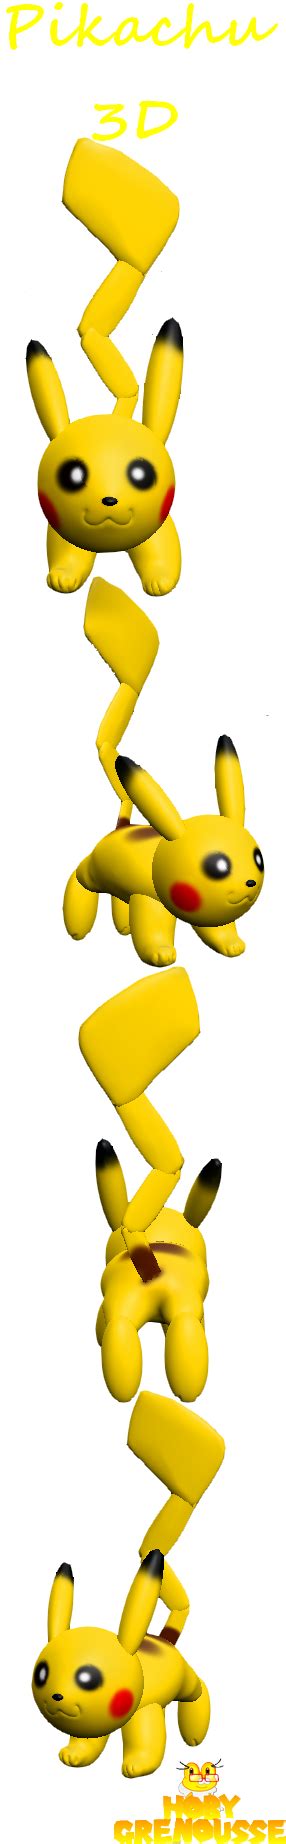 Pikachu 3d By Hobygrenousse On Deviantart